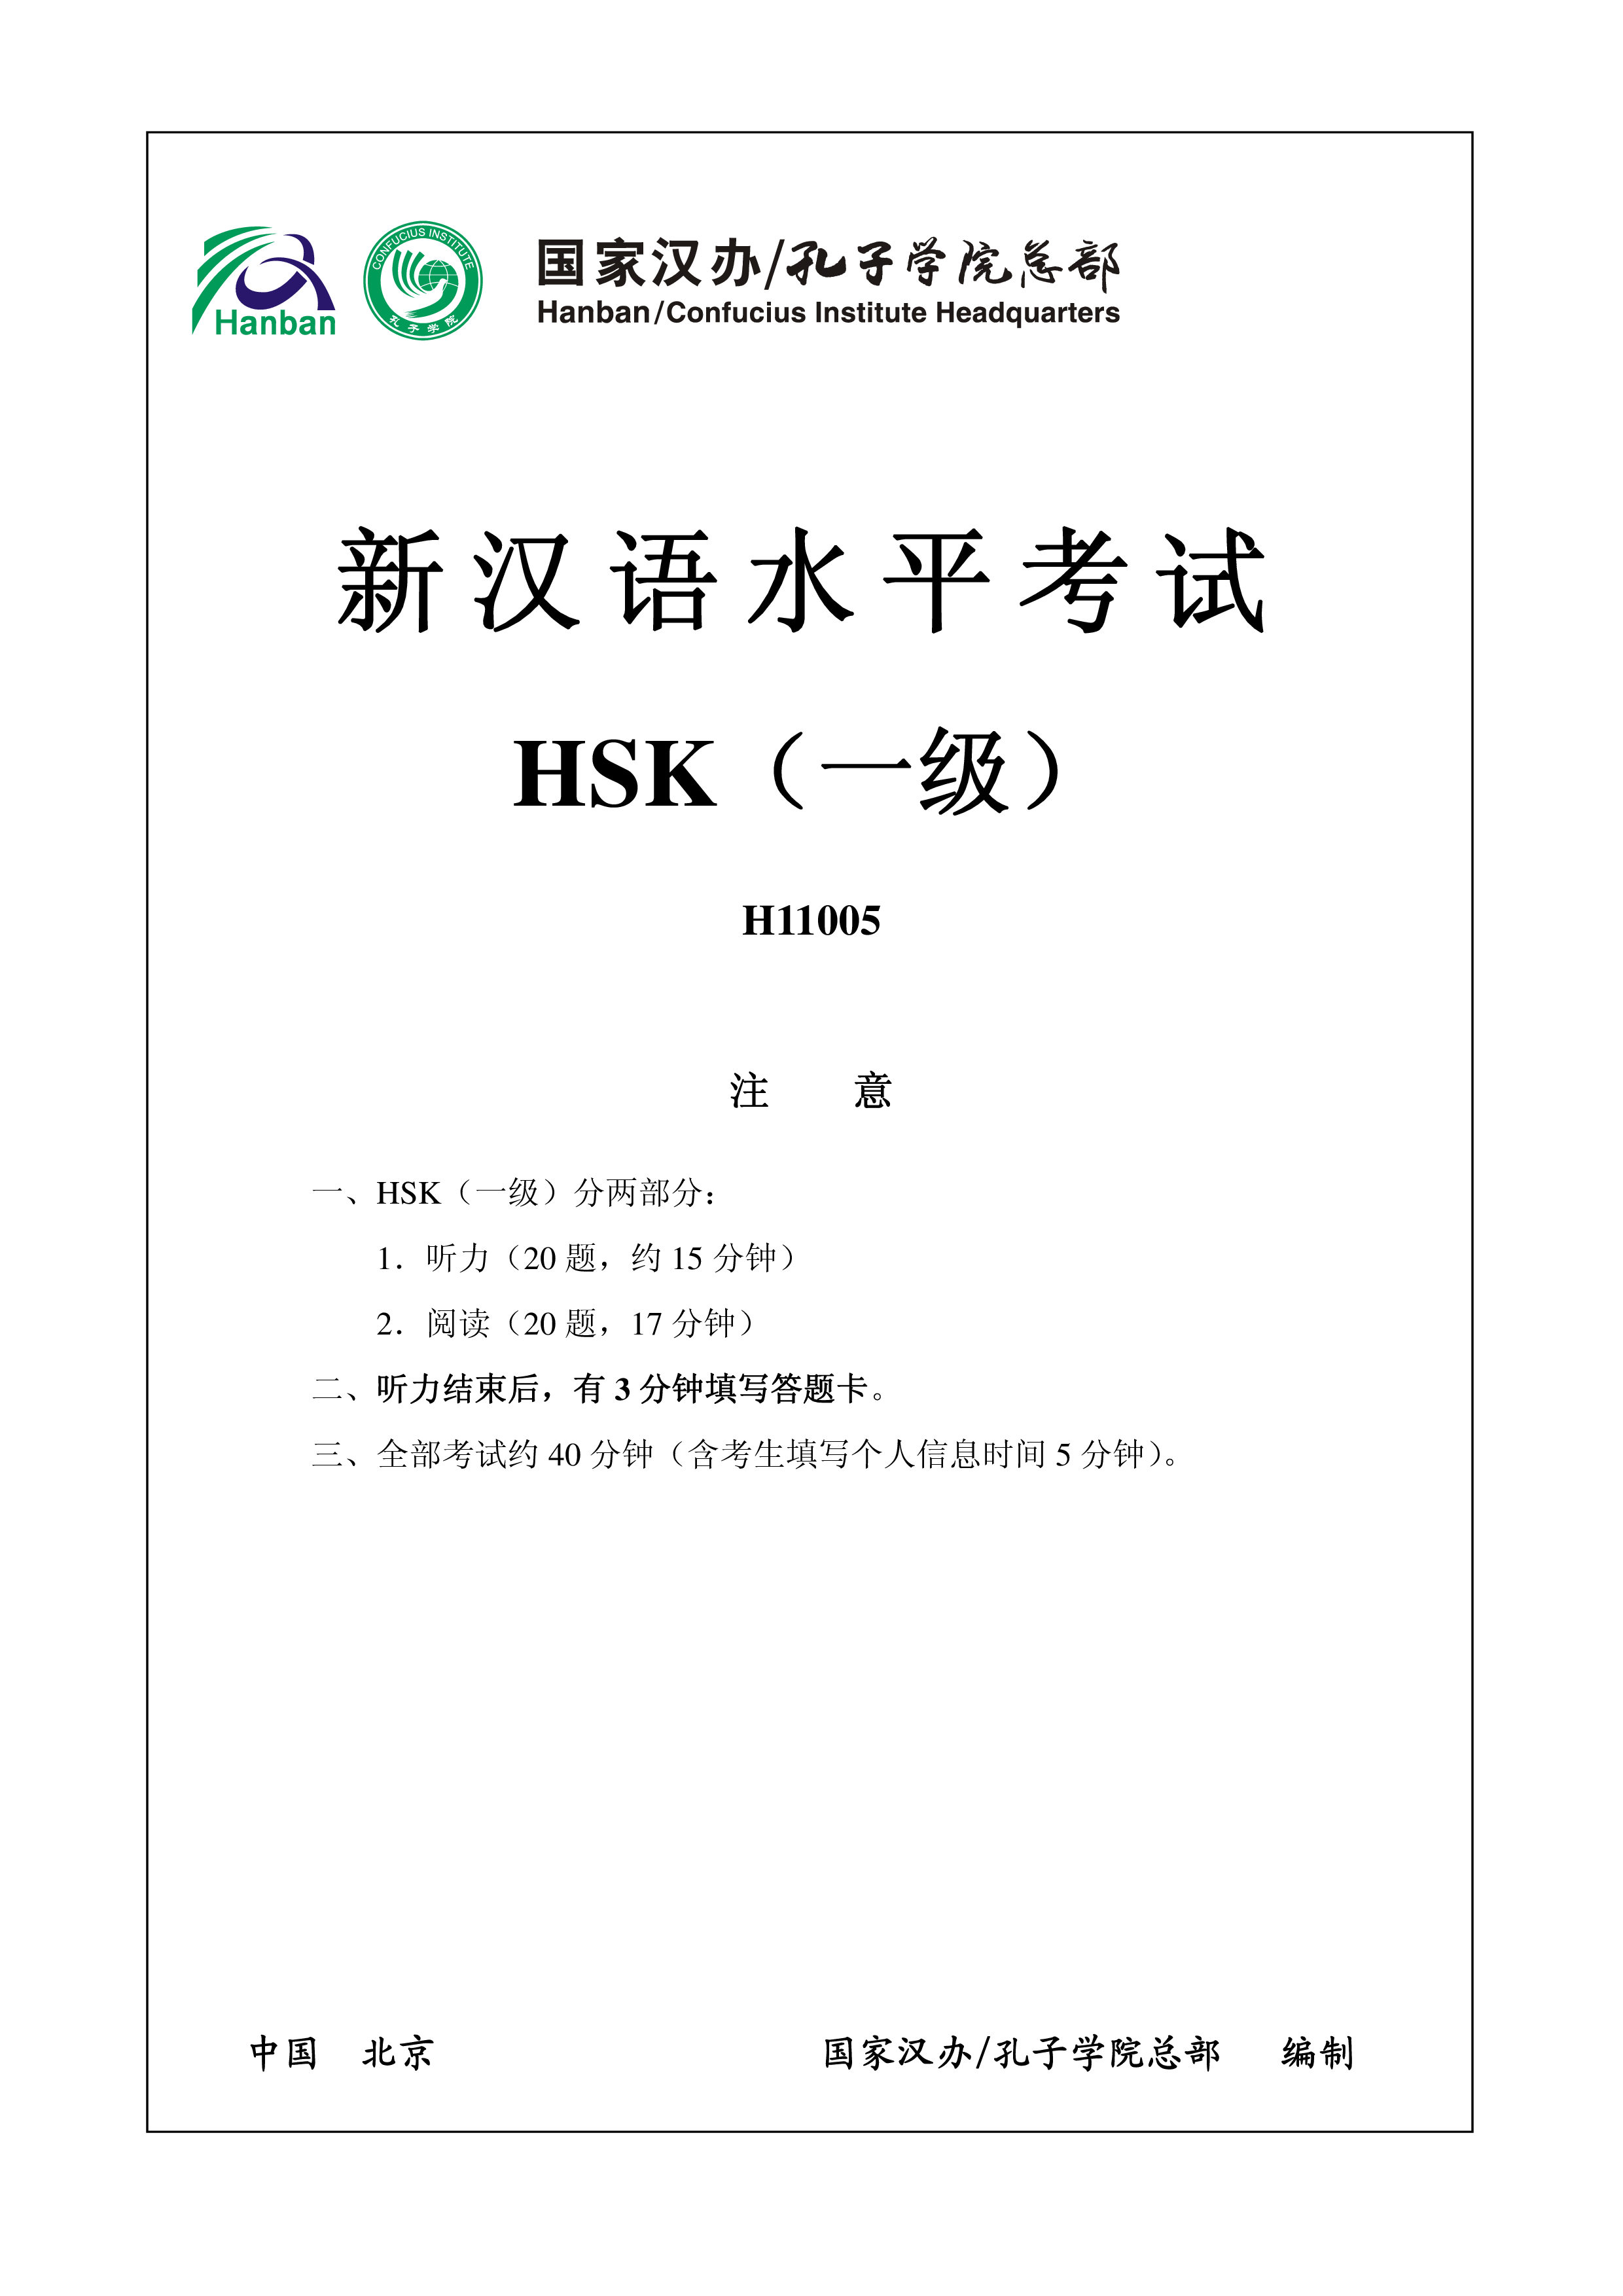 hsk1 chinese exam incl audio and answer #h11005 plantilla imagen principal